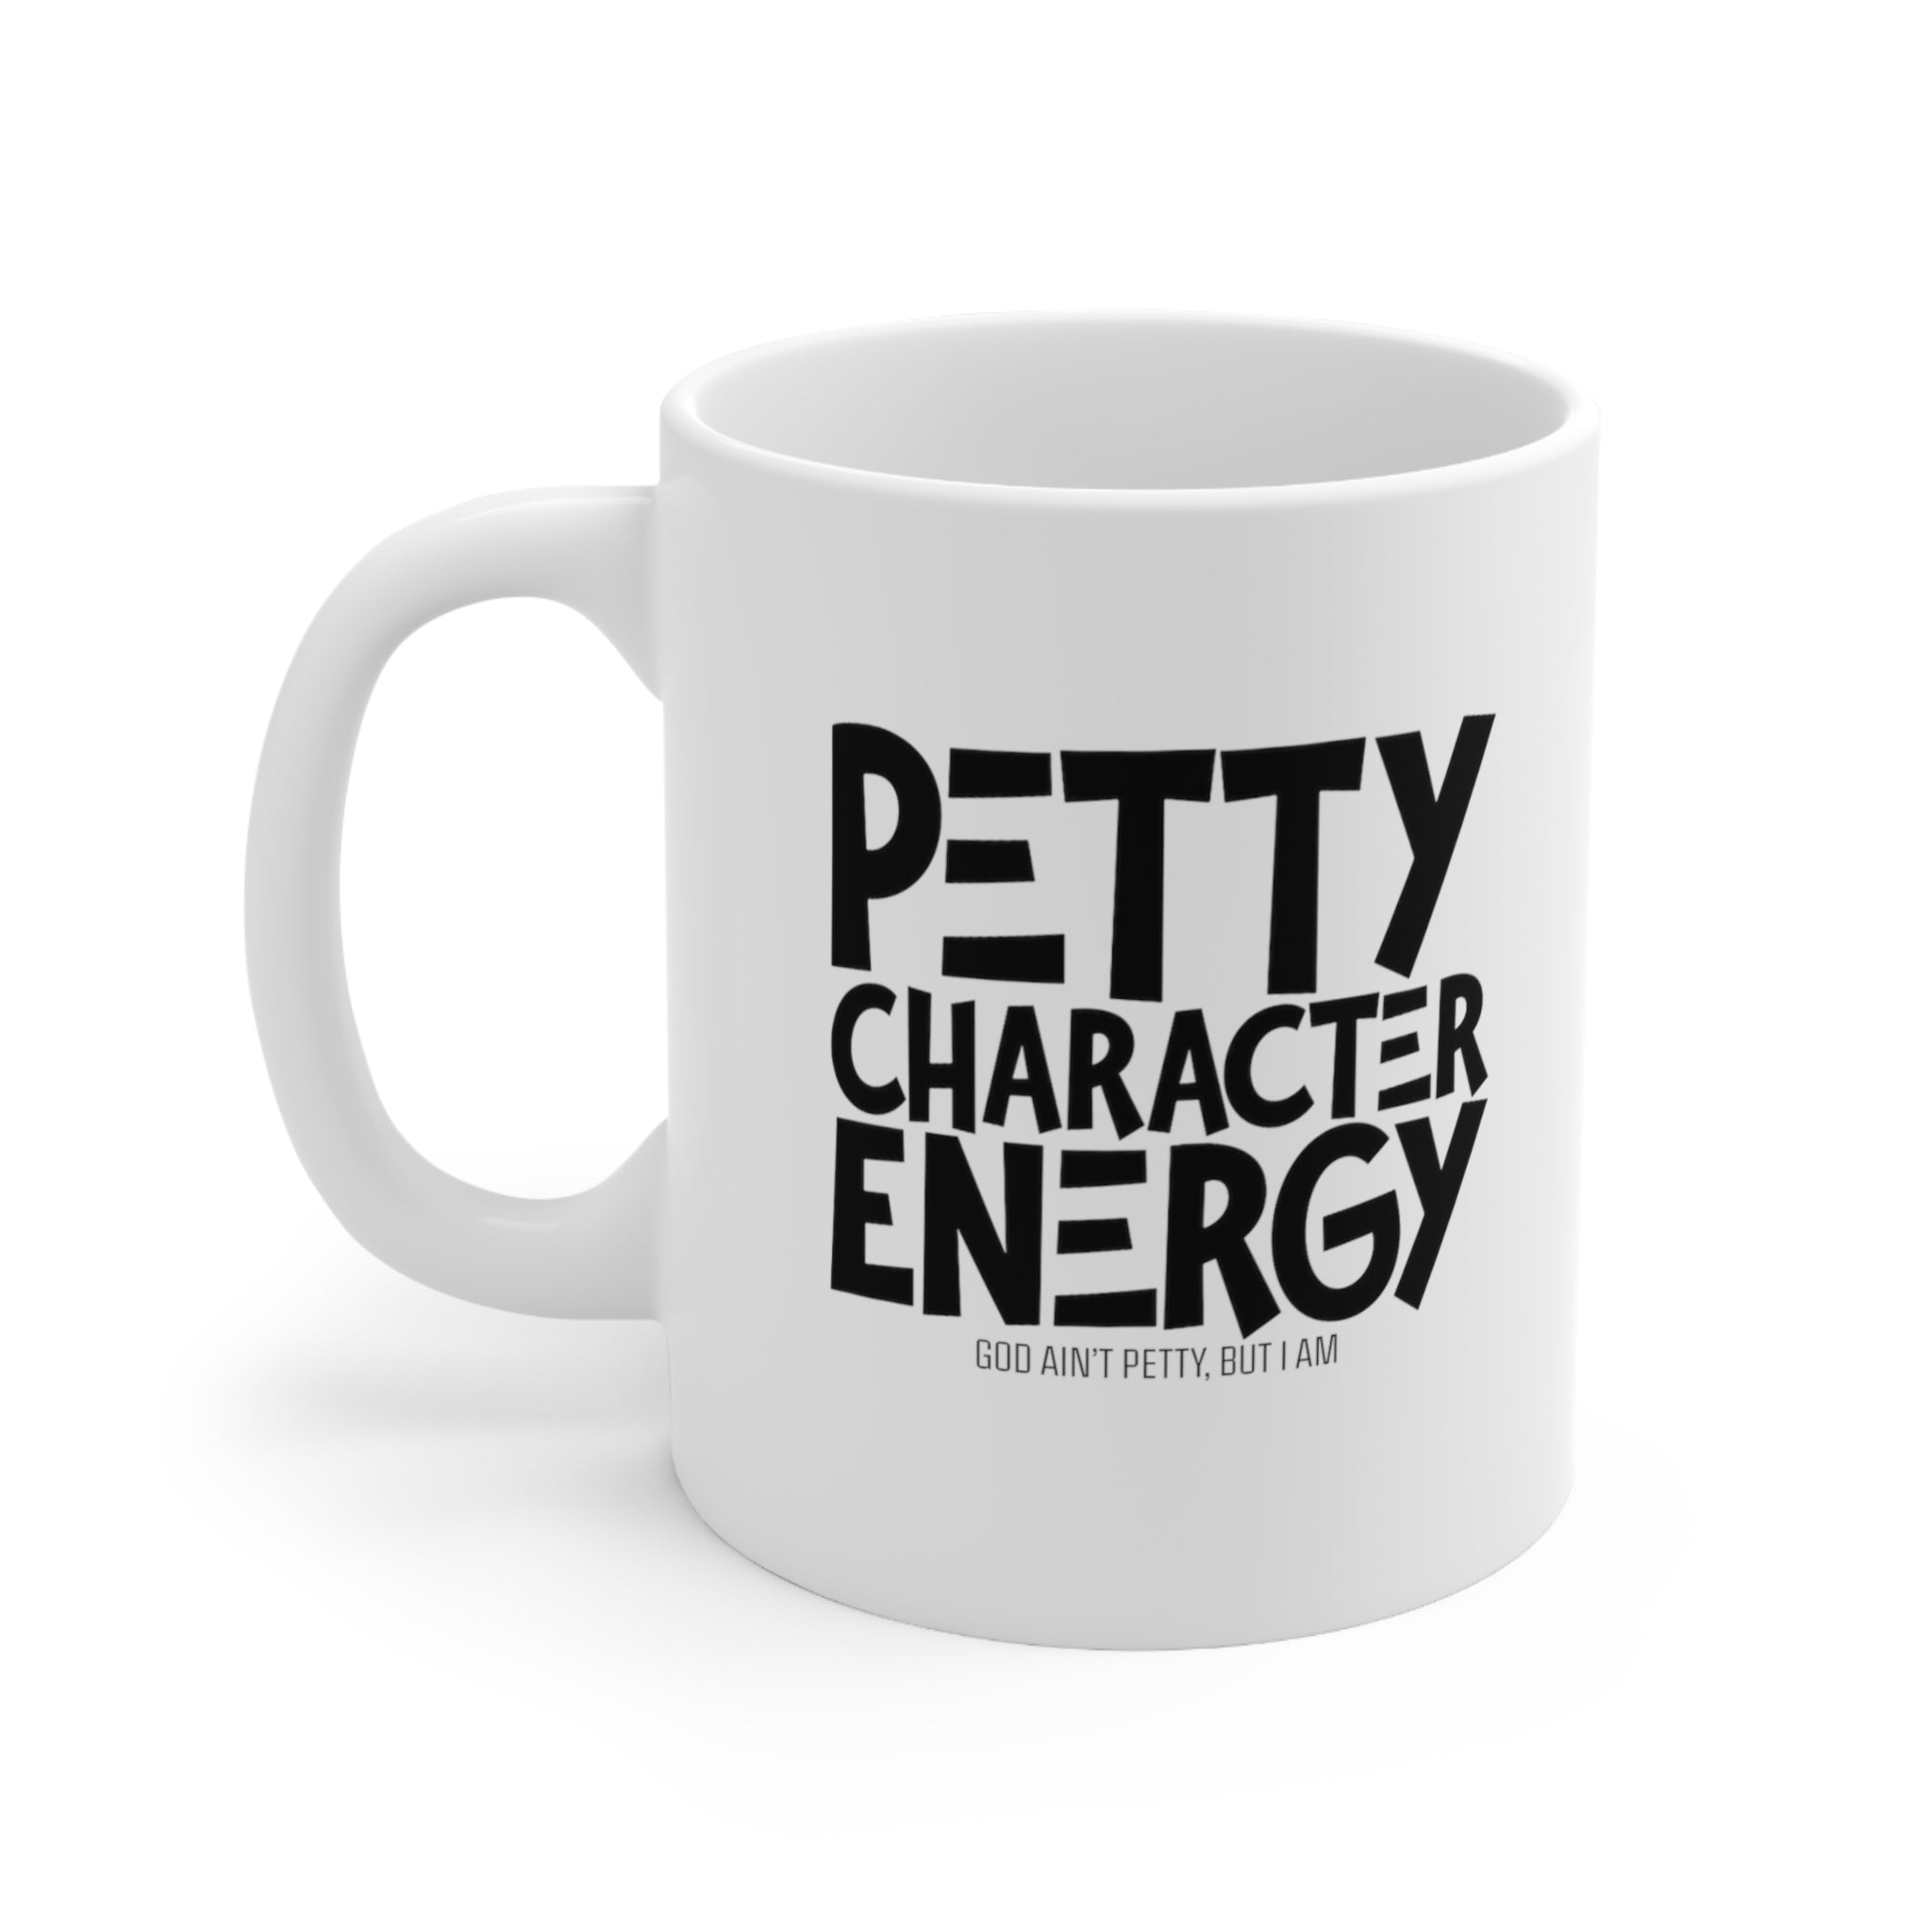 Petty Character Energy Mug 11oz (White/Black)-Mug-The Original God Ain't Petty But I Am